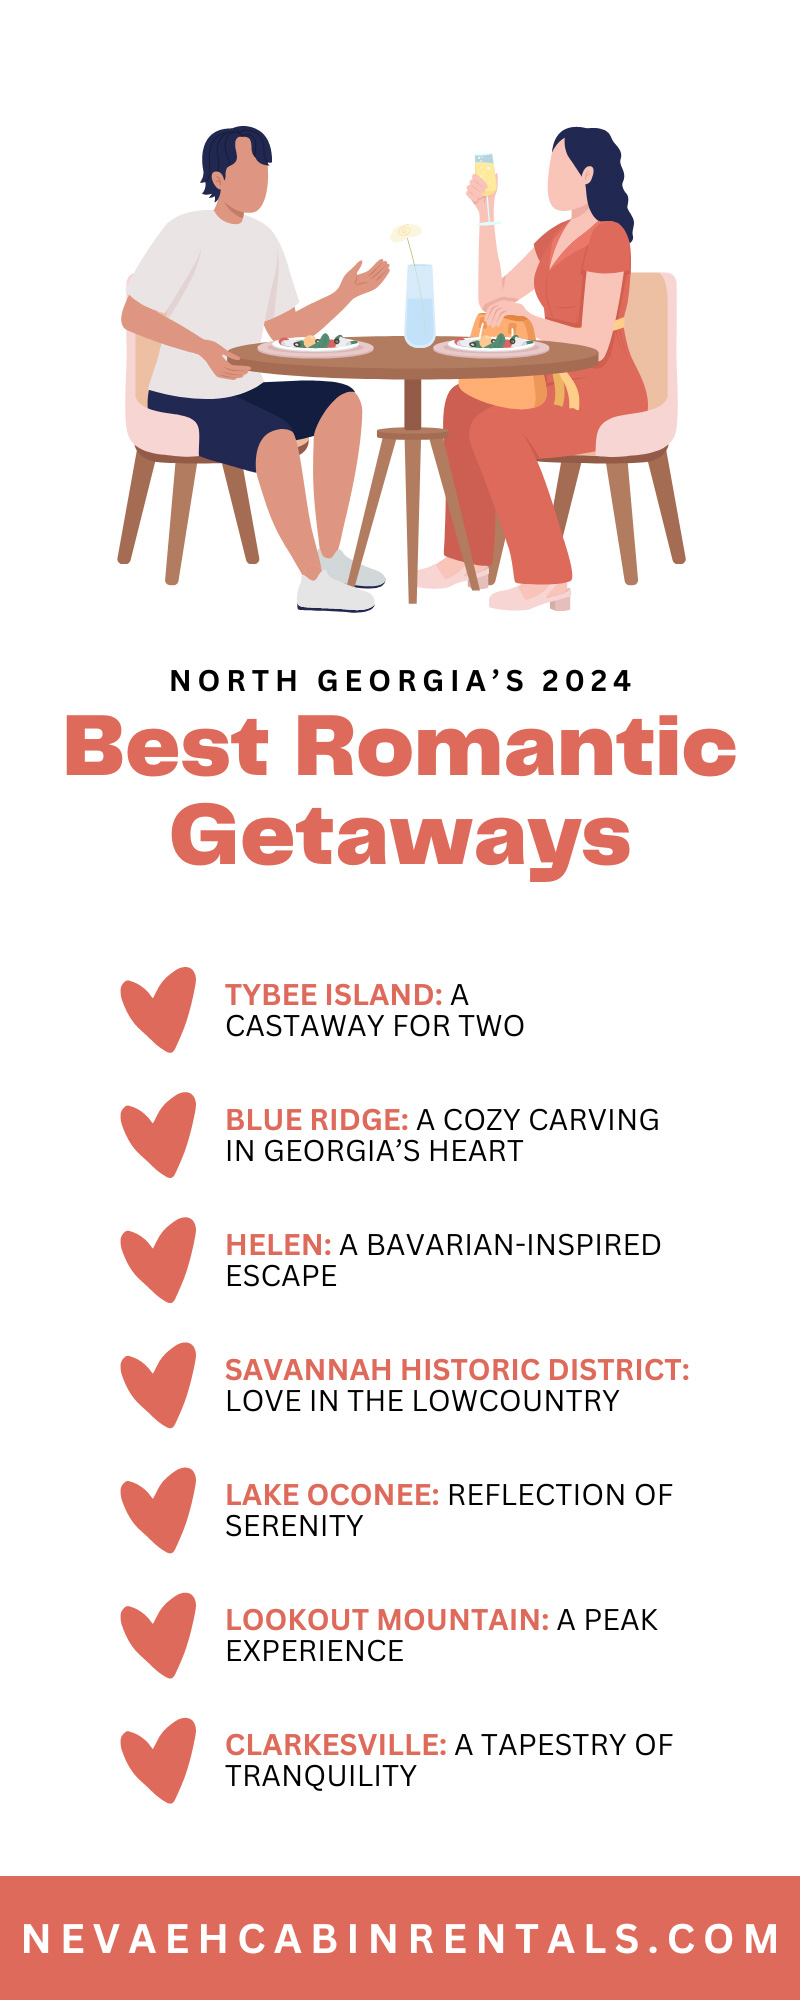 North Georgia’s 2024 Best Romantic Getaways